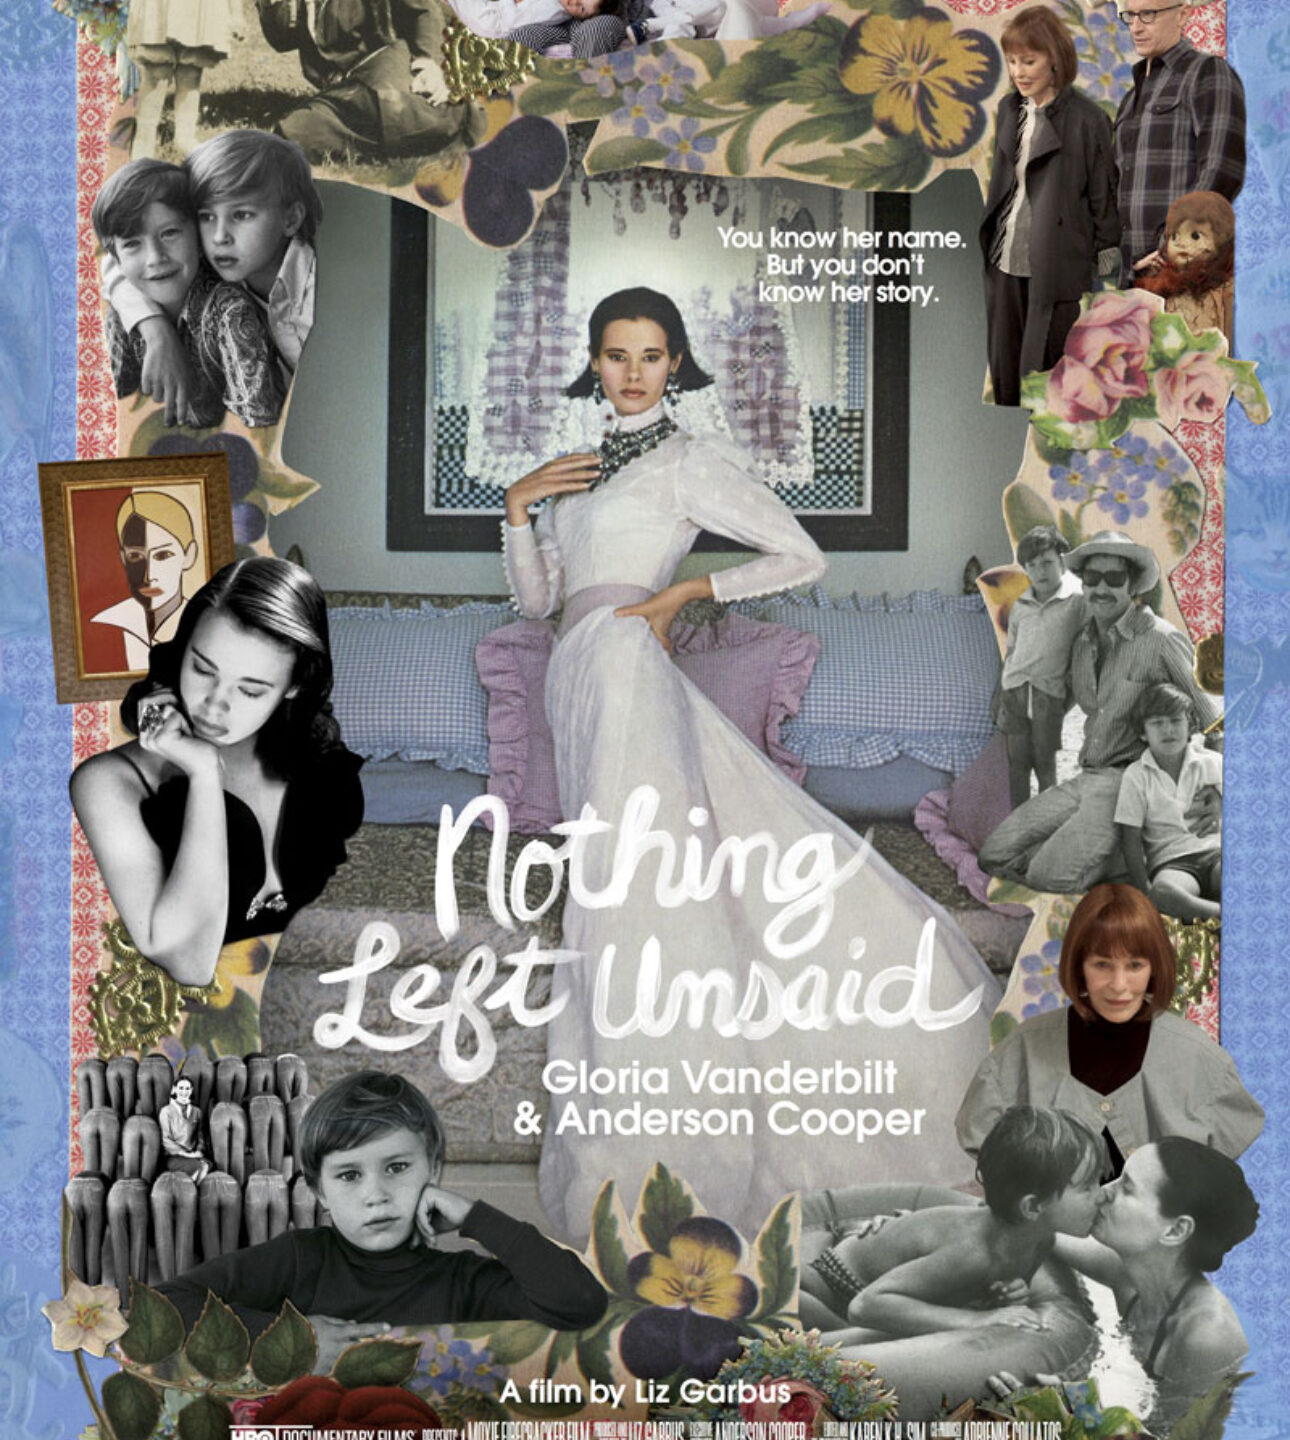 Nothing Left Unsaid: A Painter’s Connection to Gloria Vanderbilt